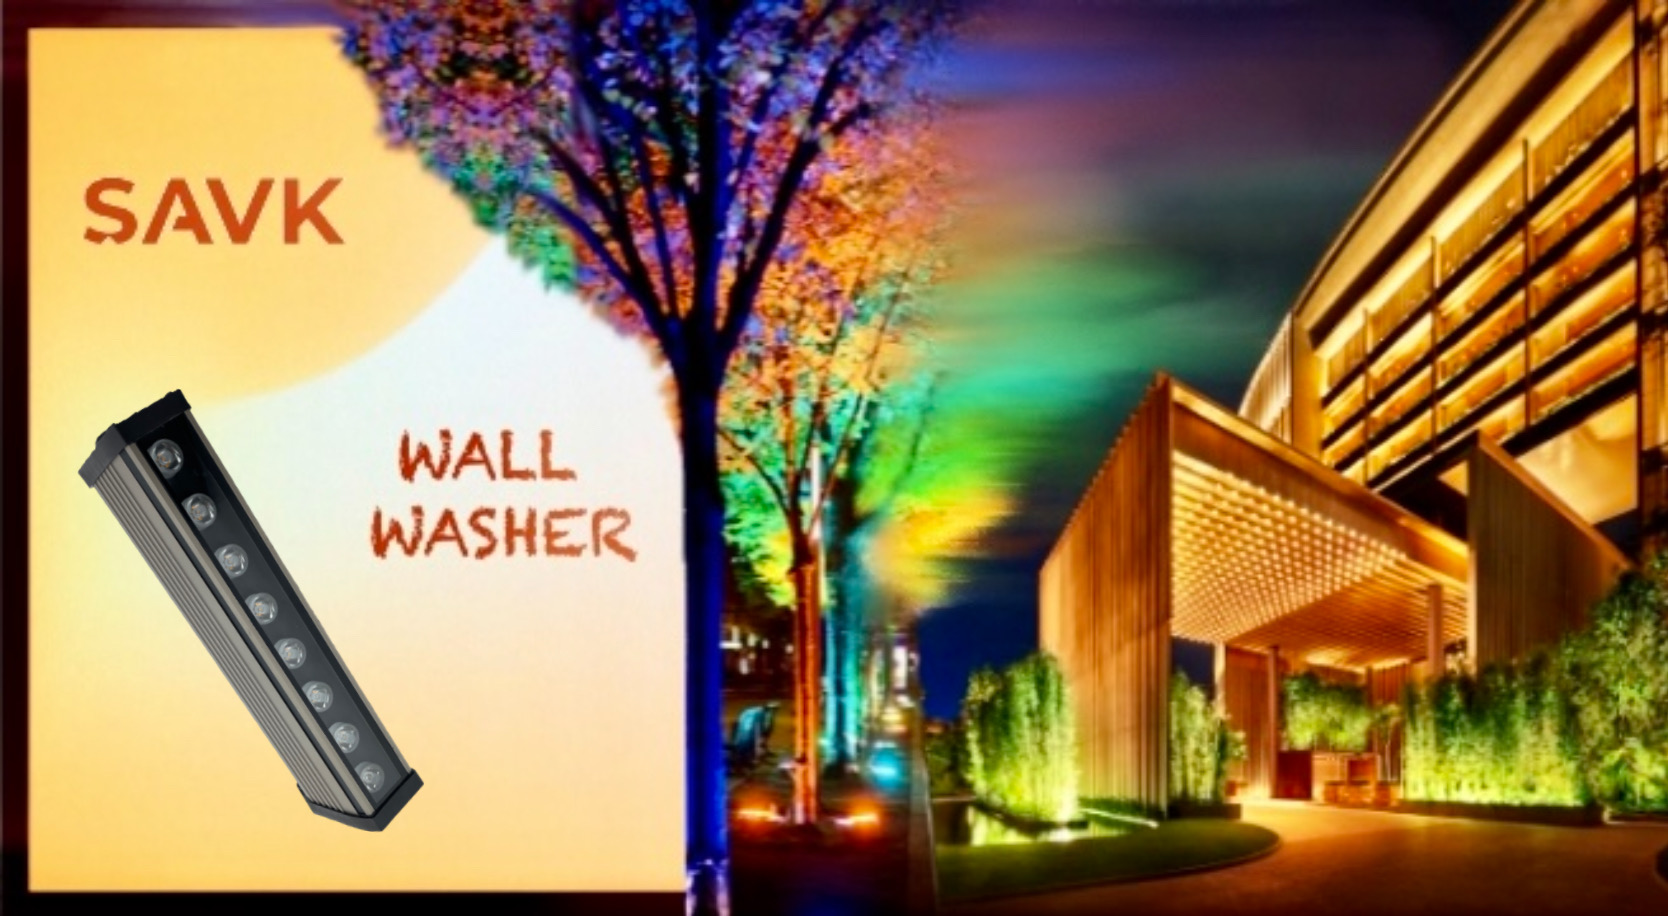 Şavk Wall Washer